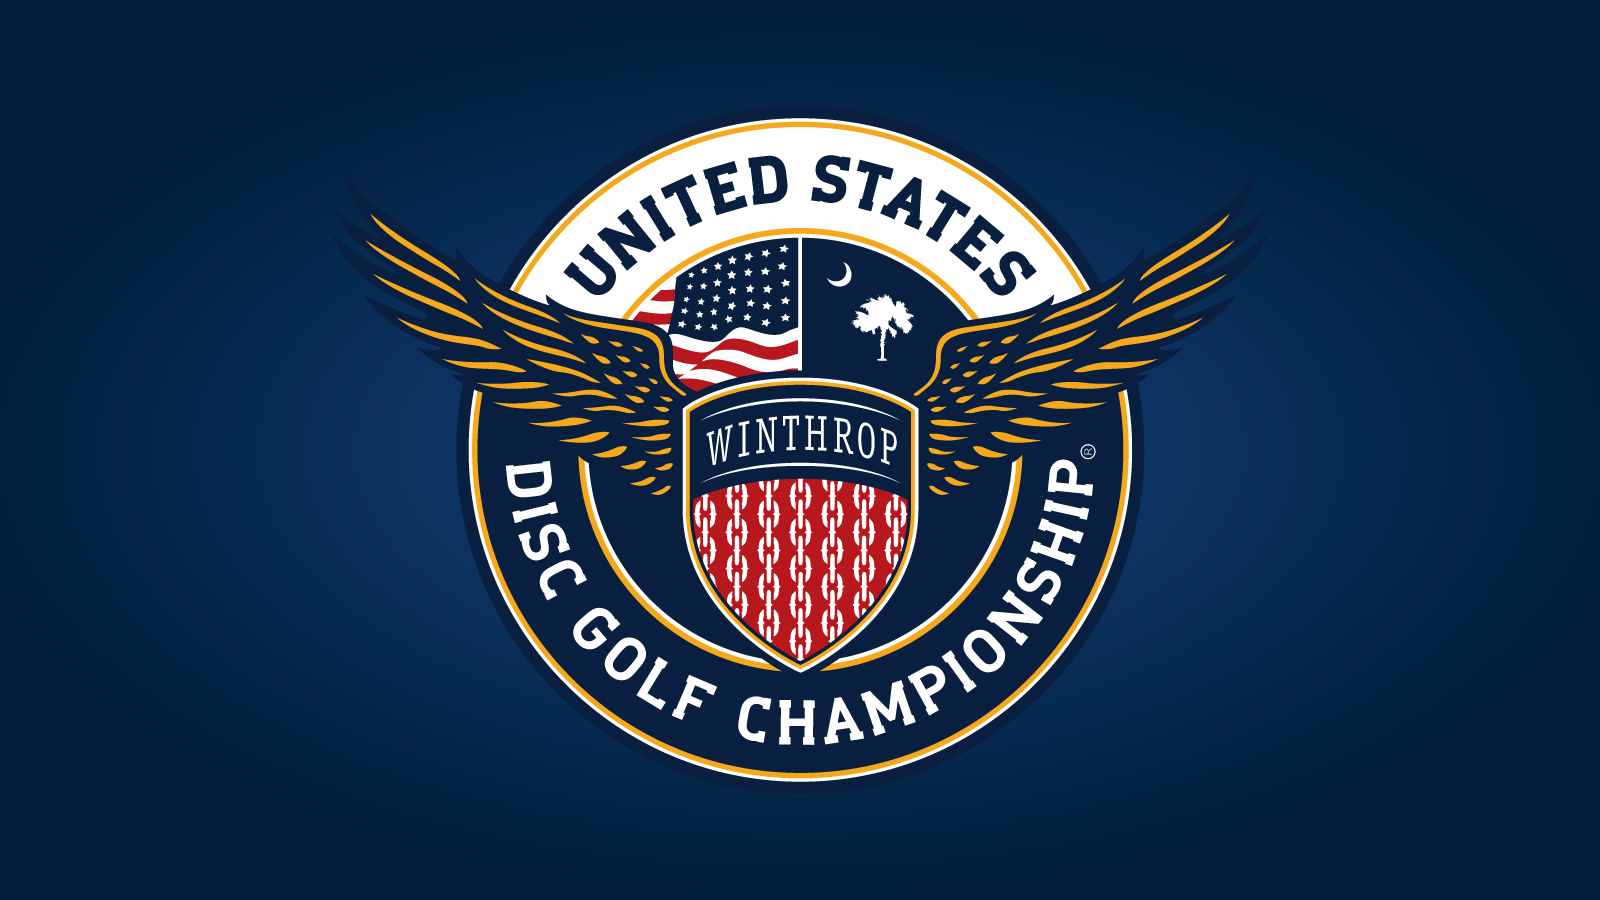 United States Disc Golf Championship - HD Wallpaper 